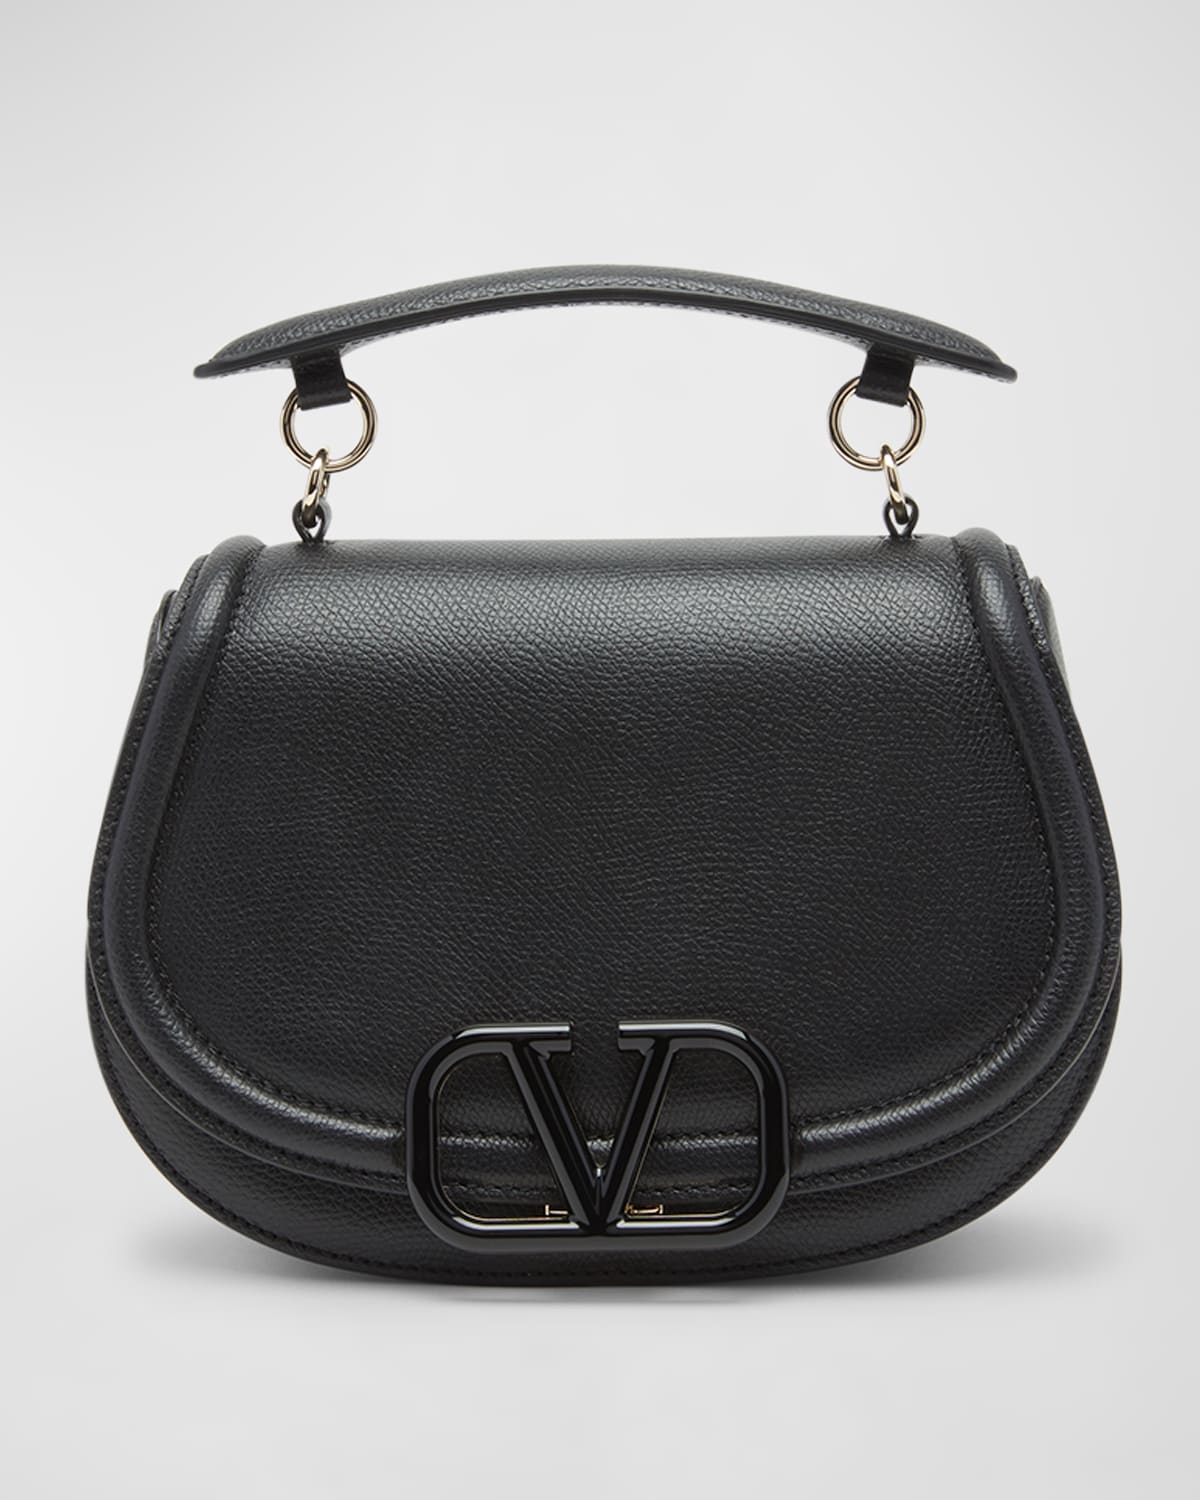 Valentino Garavani Vsling Saddle Leather Shoulder Bag In Nero